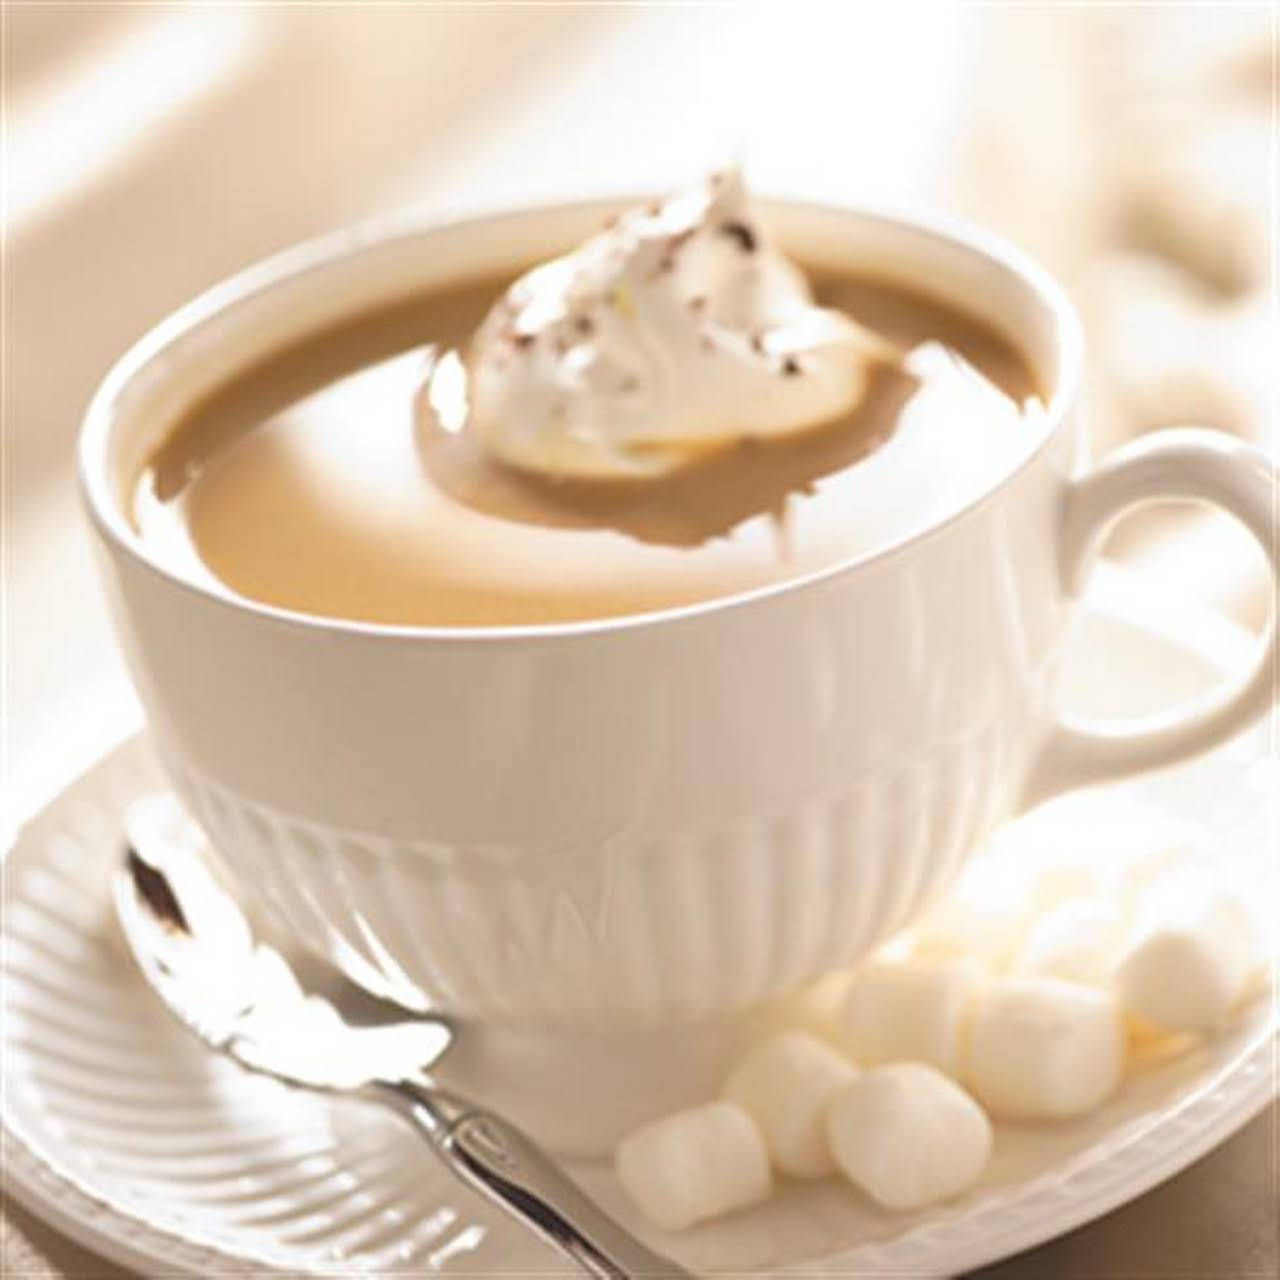 Marshmallow Frosting Caramel Coffee Design: Design af Marshmallow Frosting Caramel Coffee Wallpaper